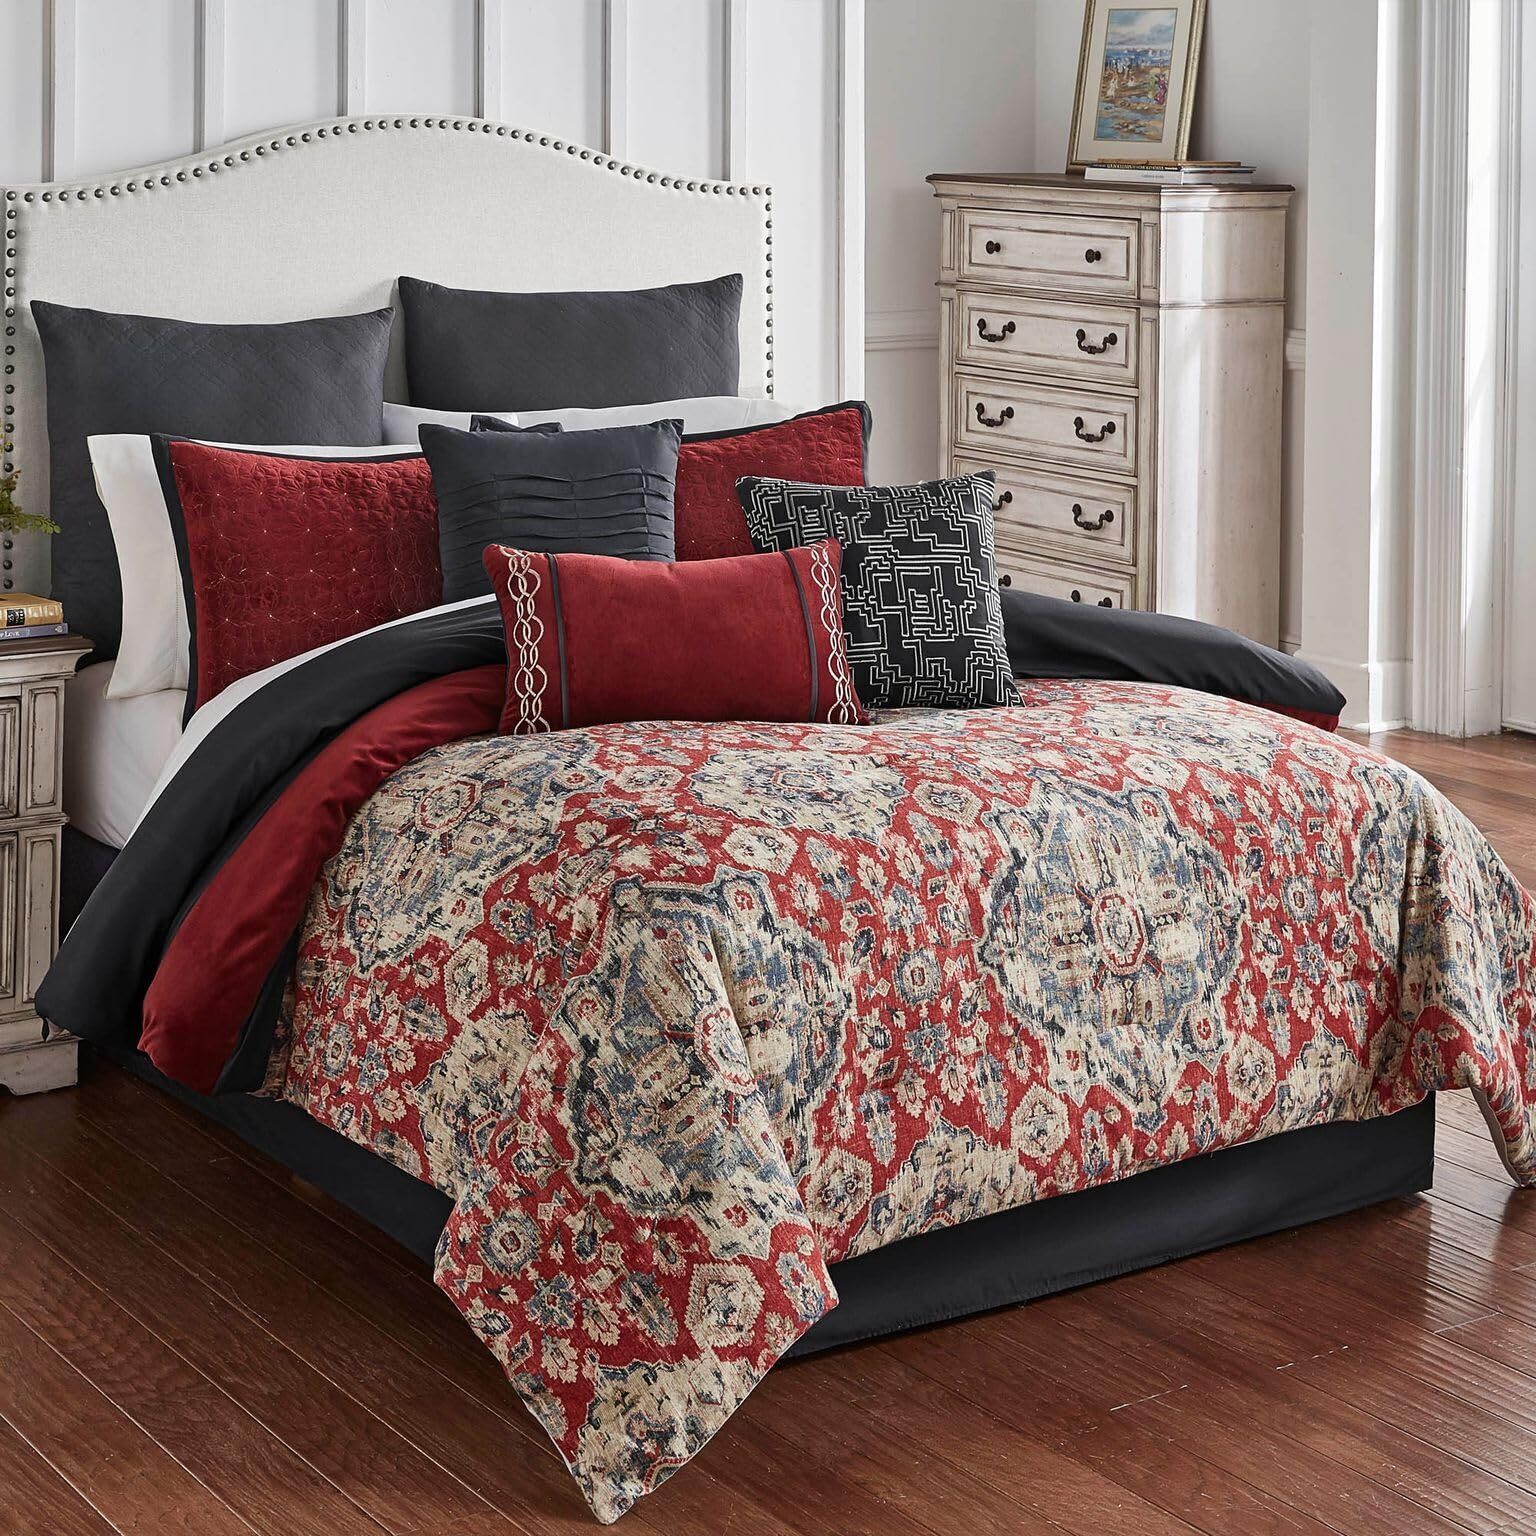 Riverbrook Home 100% Polyester Comforter Set, King, Sadler-Red/Gray,10 Piece Set